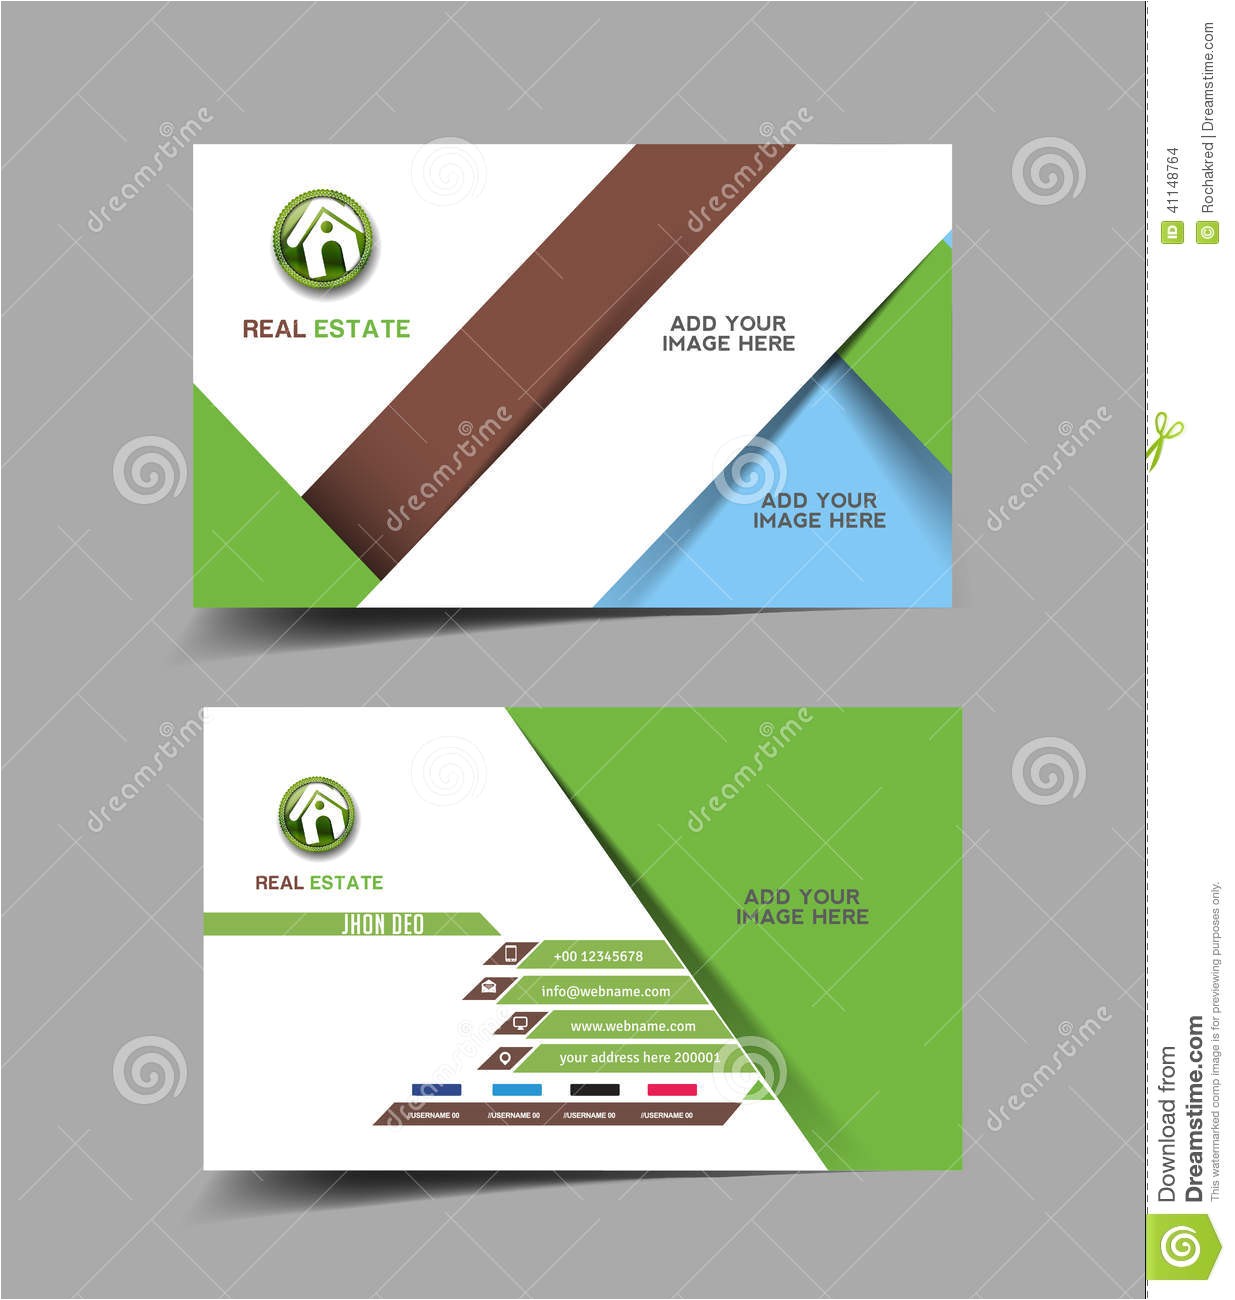 stock illustration real estate agent business card set template image41148764